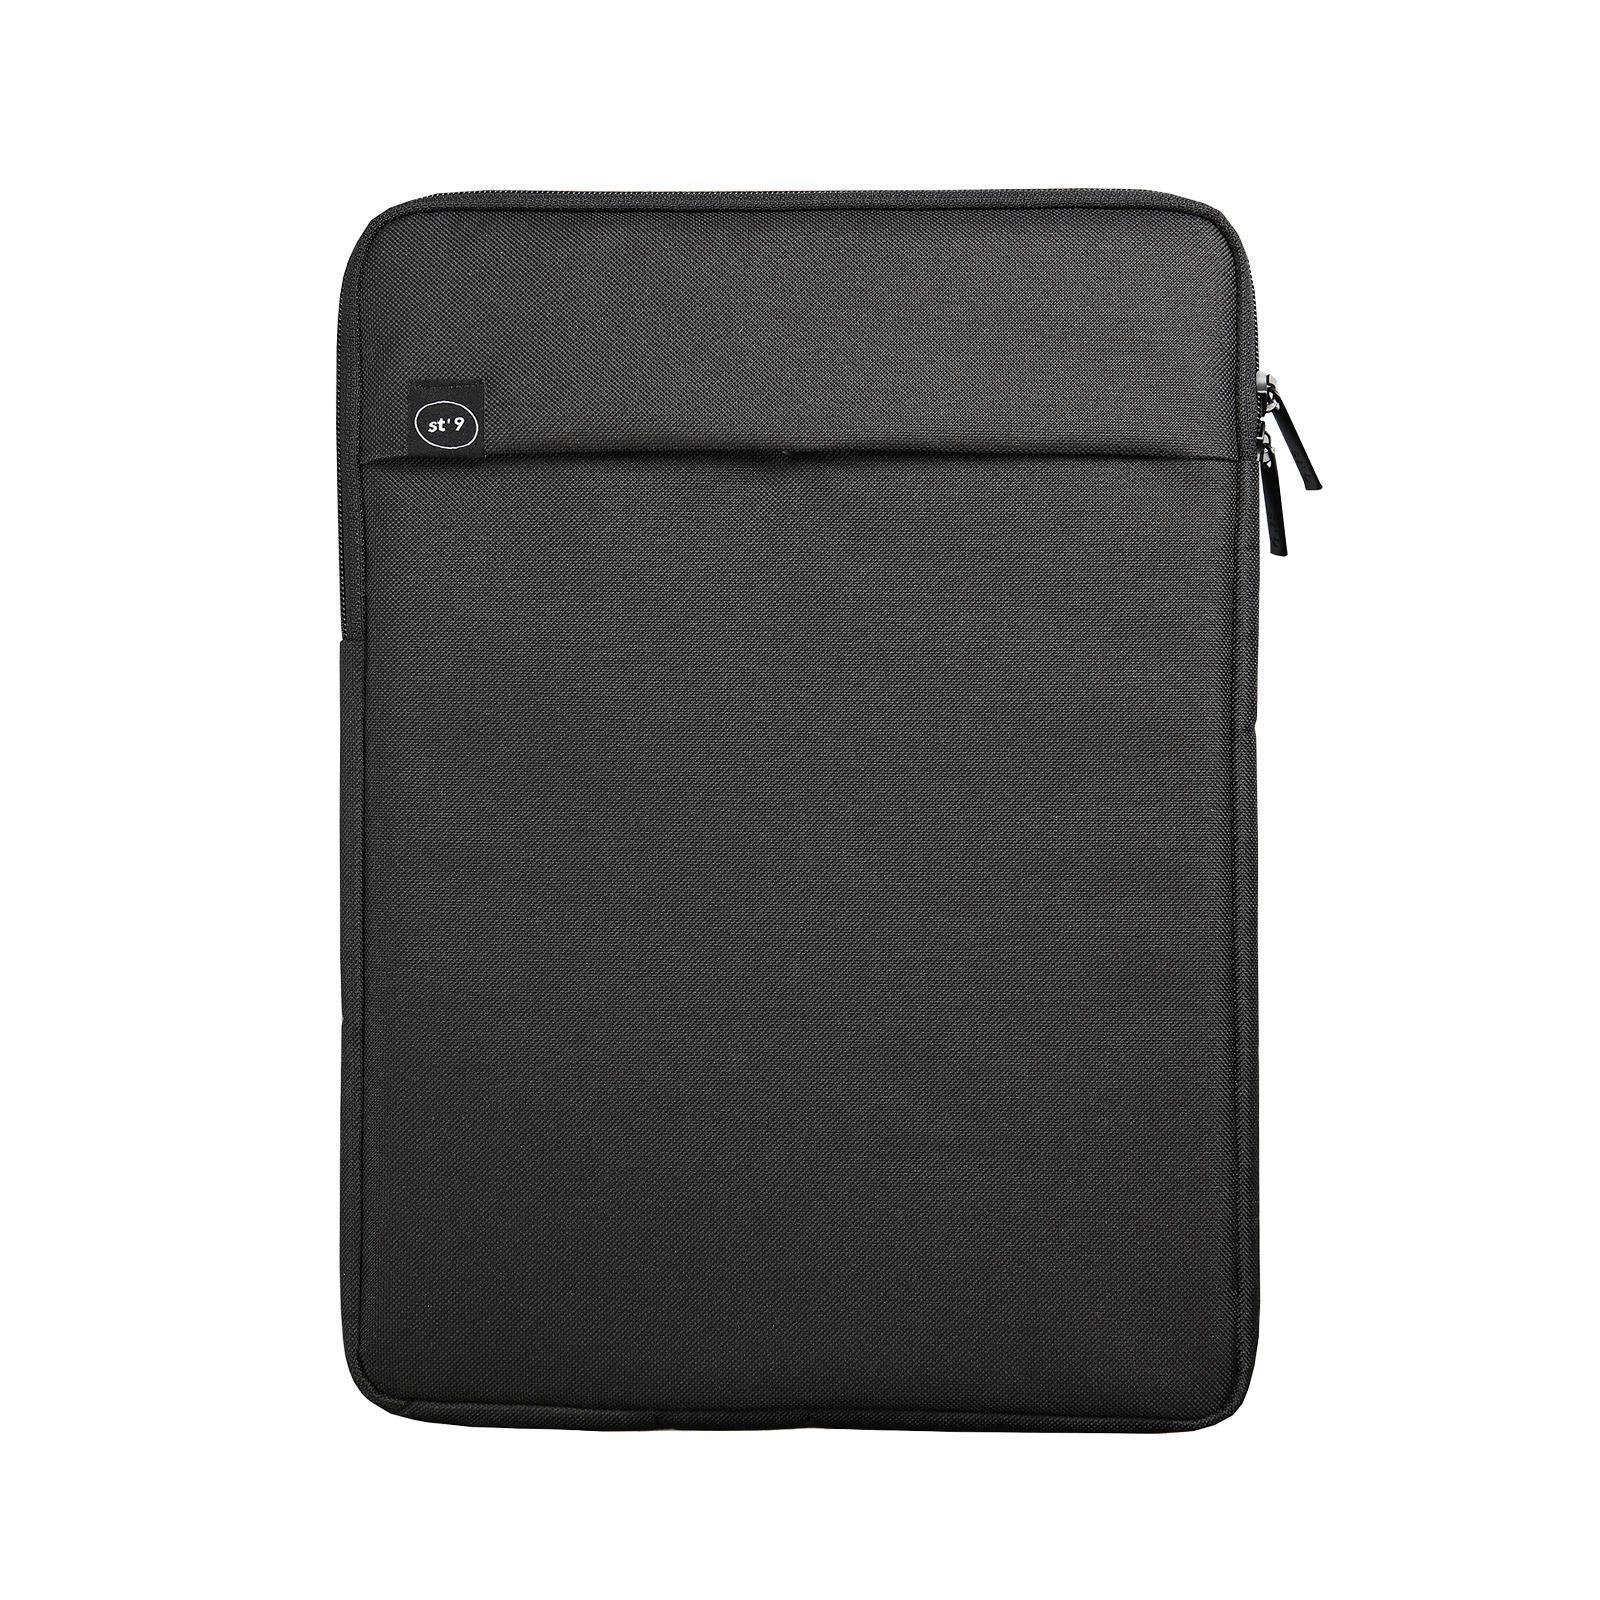 ST9 M size 13 inch Black Laptop Sleeve Padded Travel Carry Case Bag LUKE